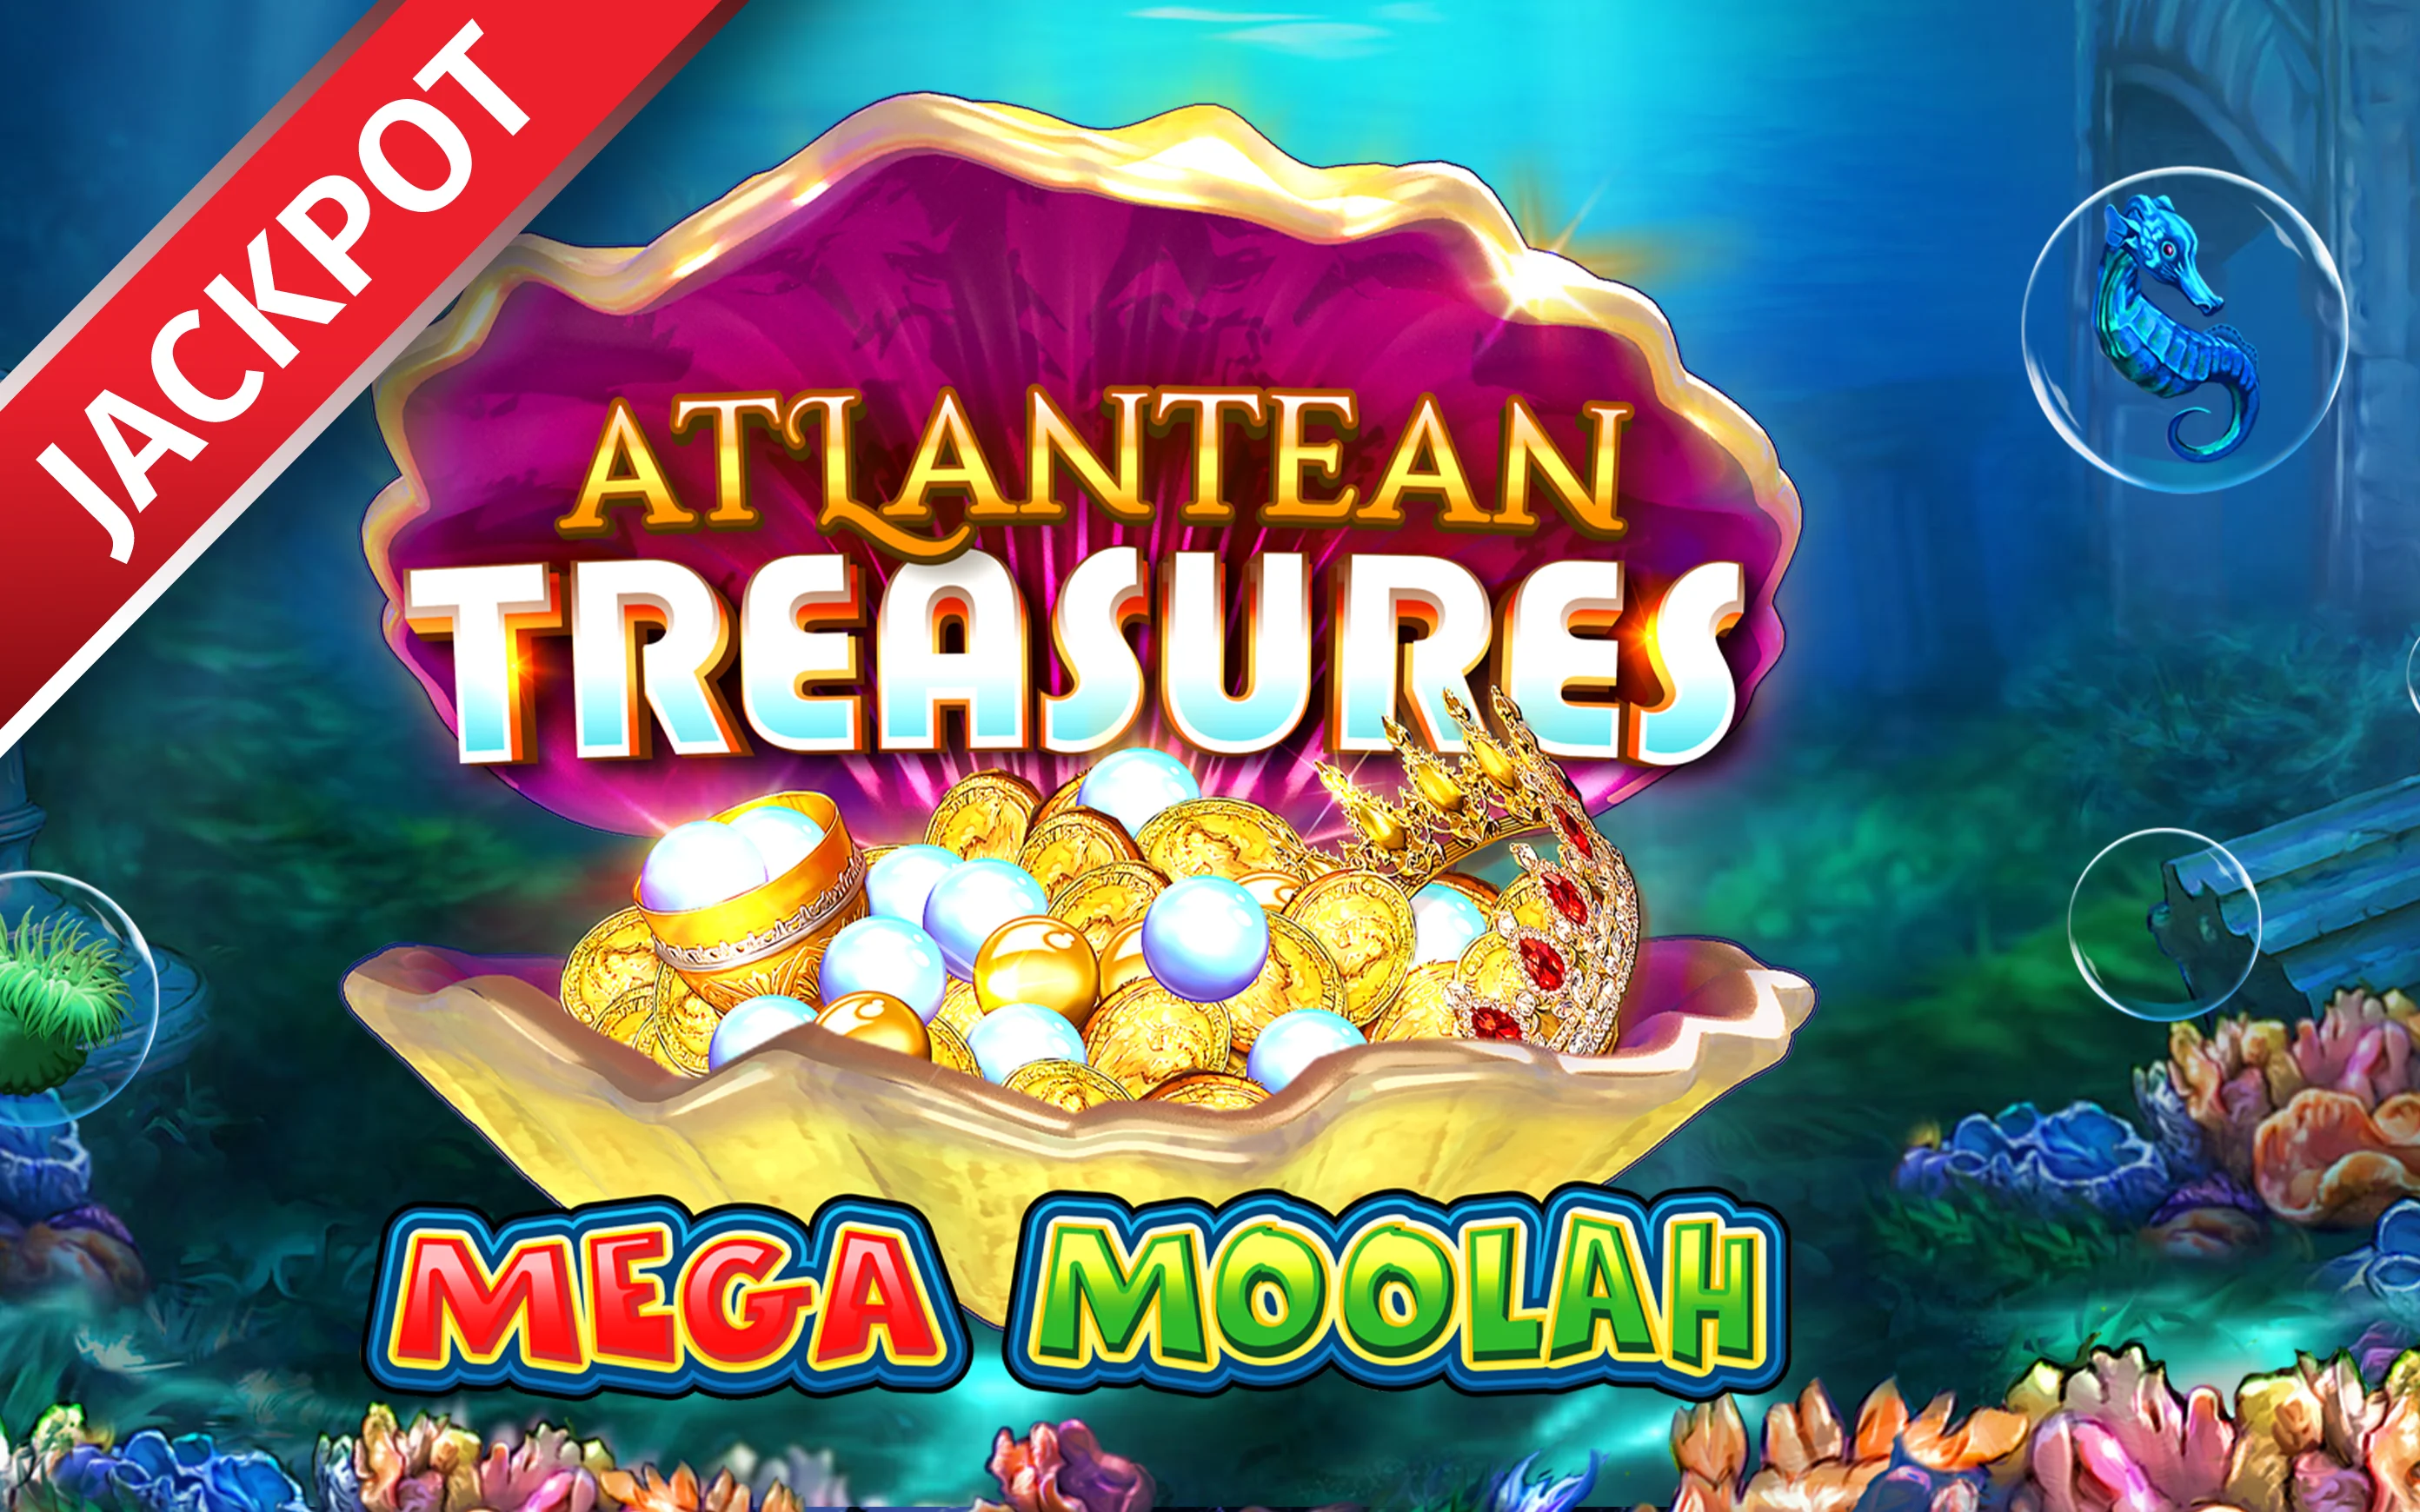 Joacă Atlantean Treasures Mega Moolah ™ în cazinoul online Starcasino.be